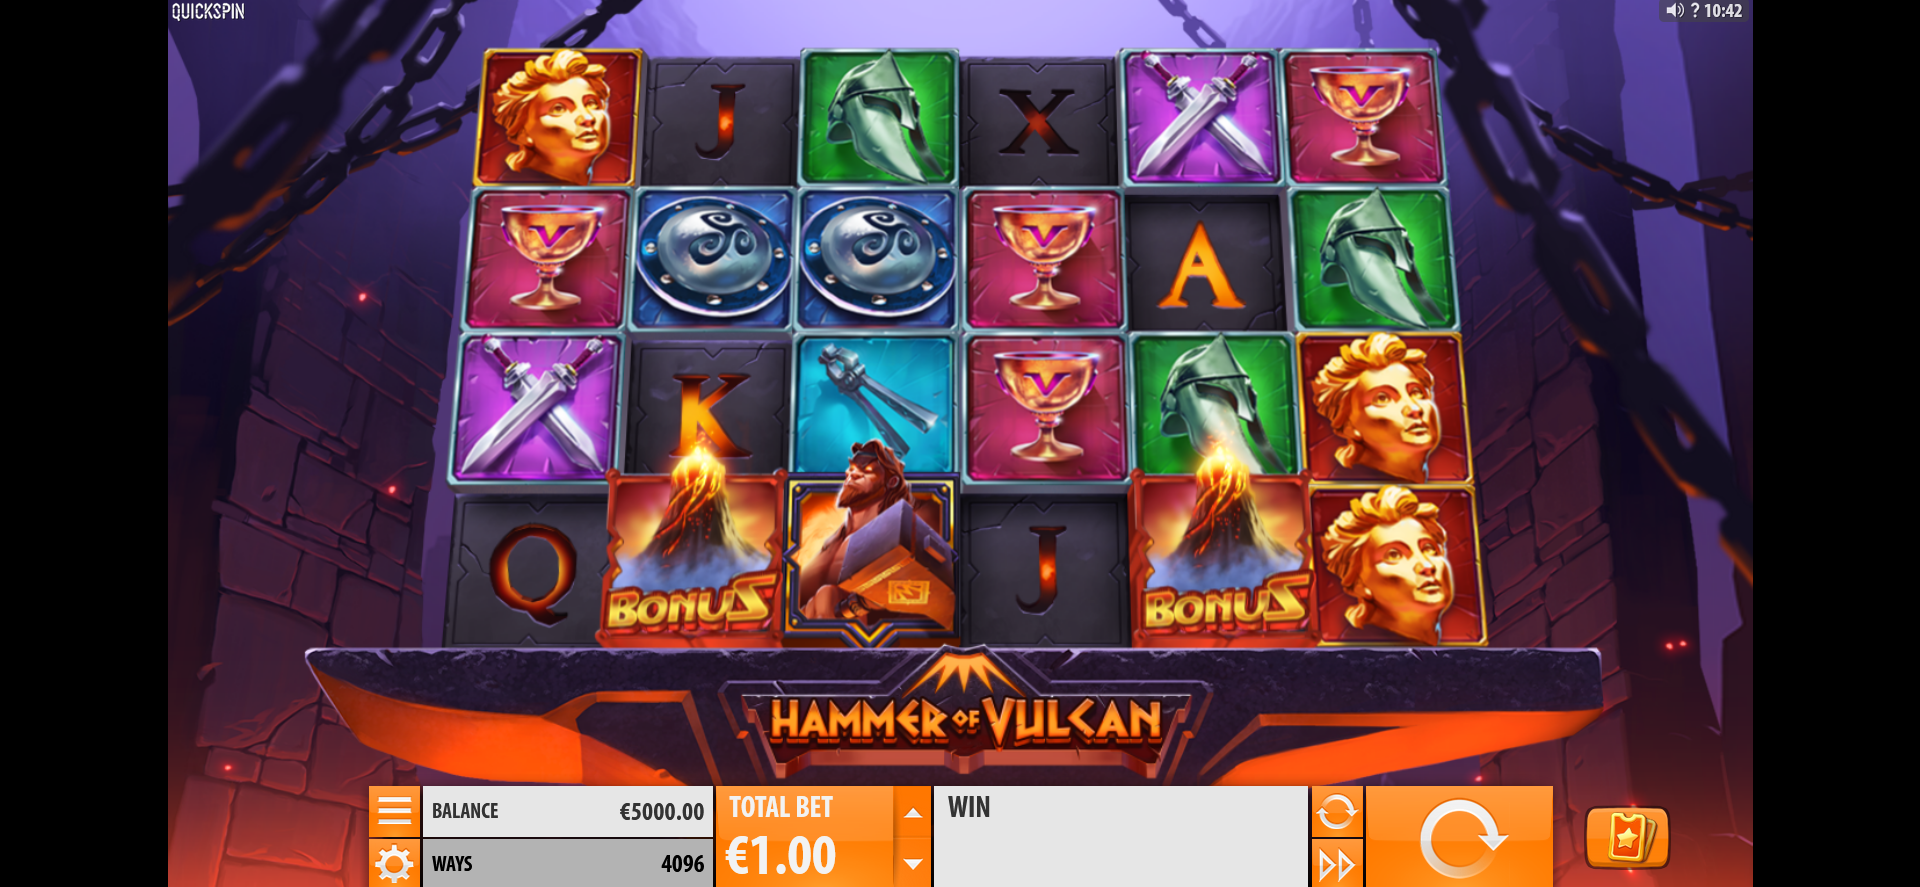 interfaccia grafica della slot online hammer of vulcan